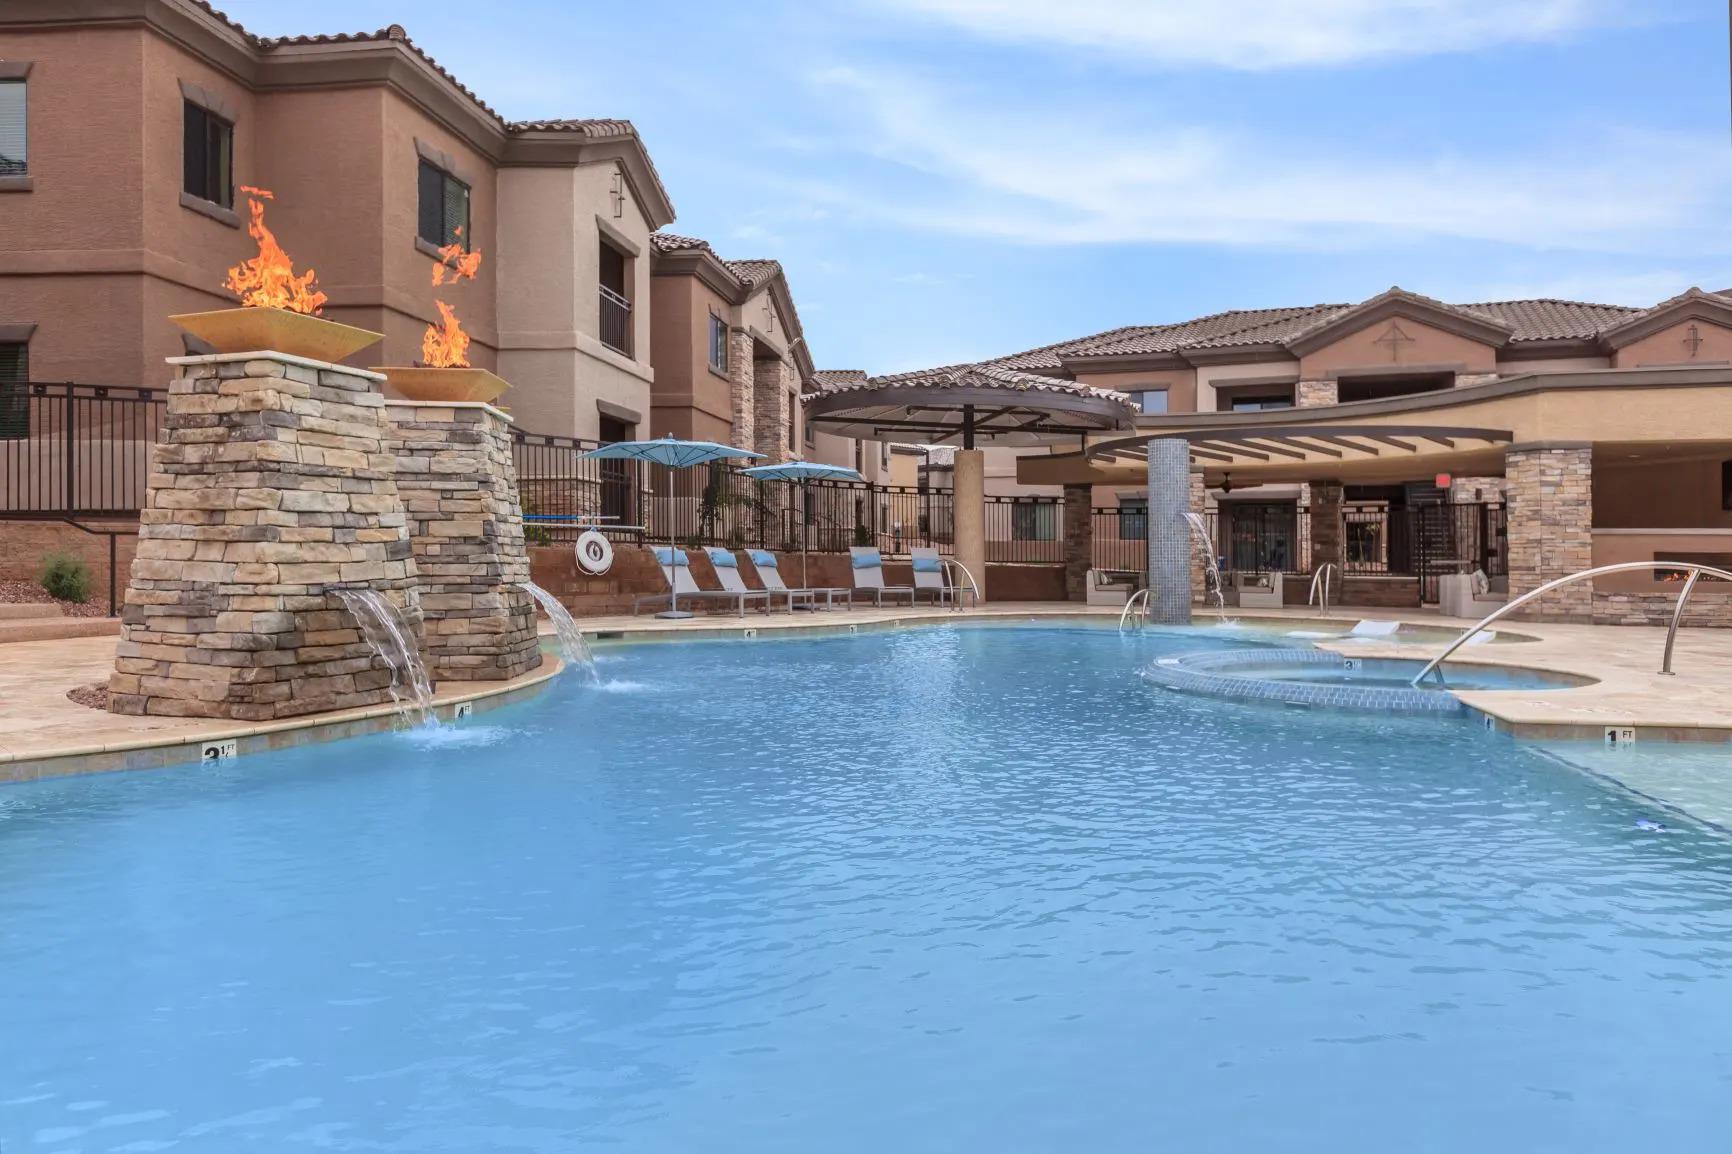 Resort-style swimming pool